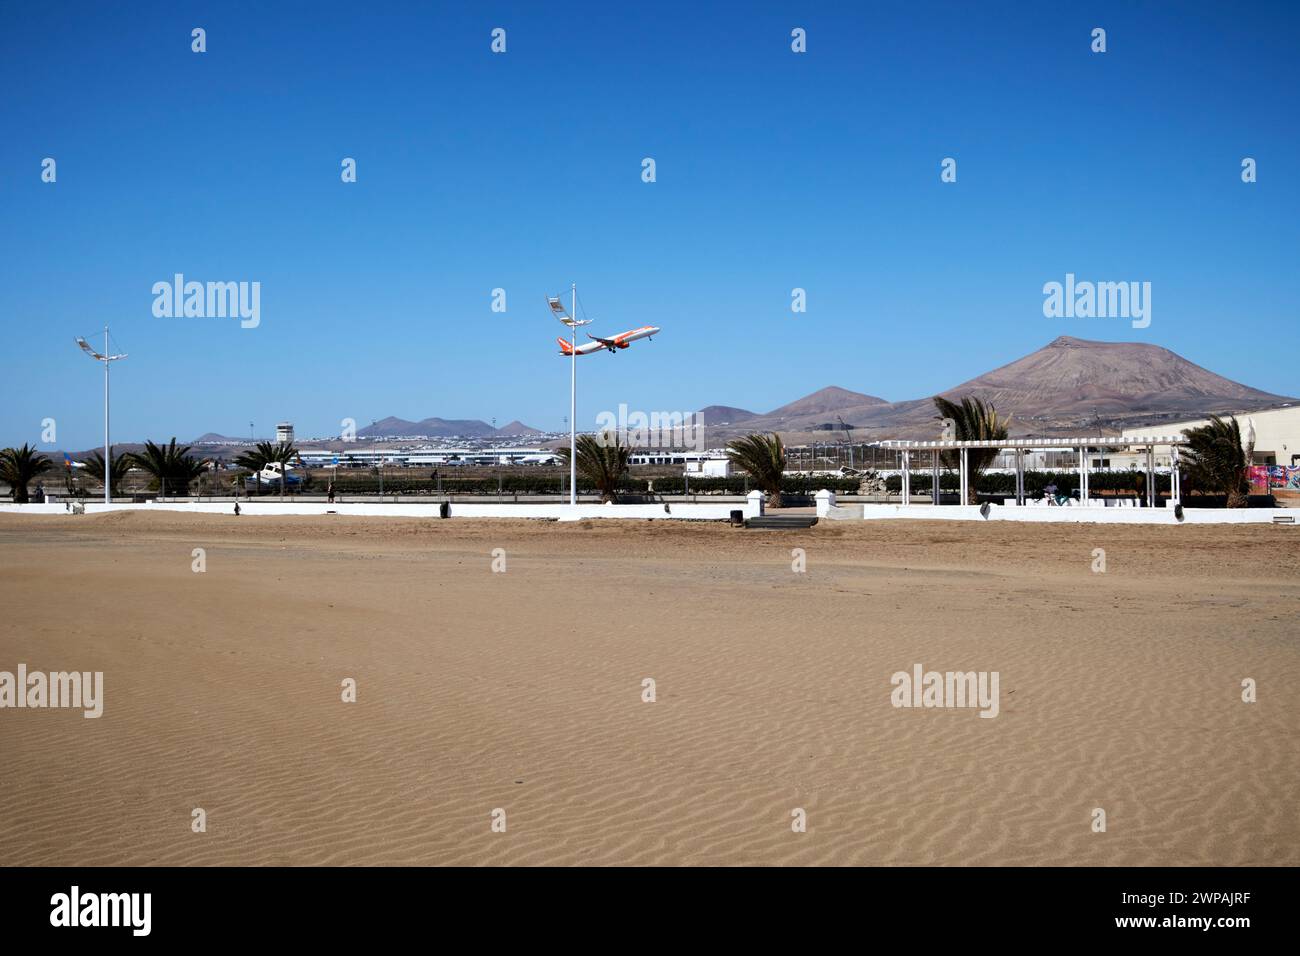 easyjet aircraft taking off over sandy playa honda beach looking towards lanzarote airport Playa Honda, Lanzarote, Canary Islands, spain Stock Photo